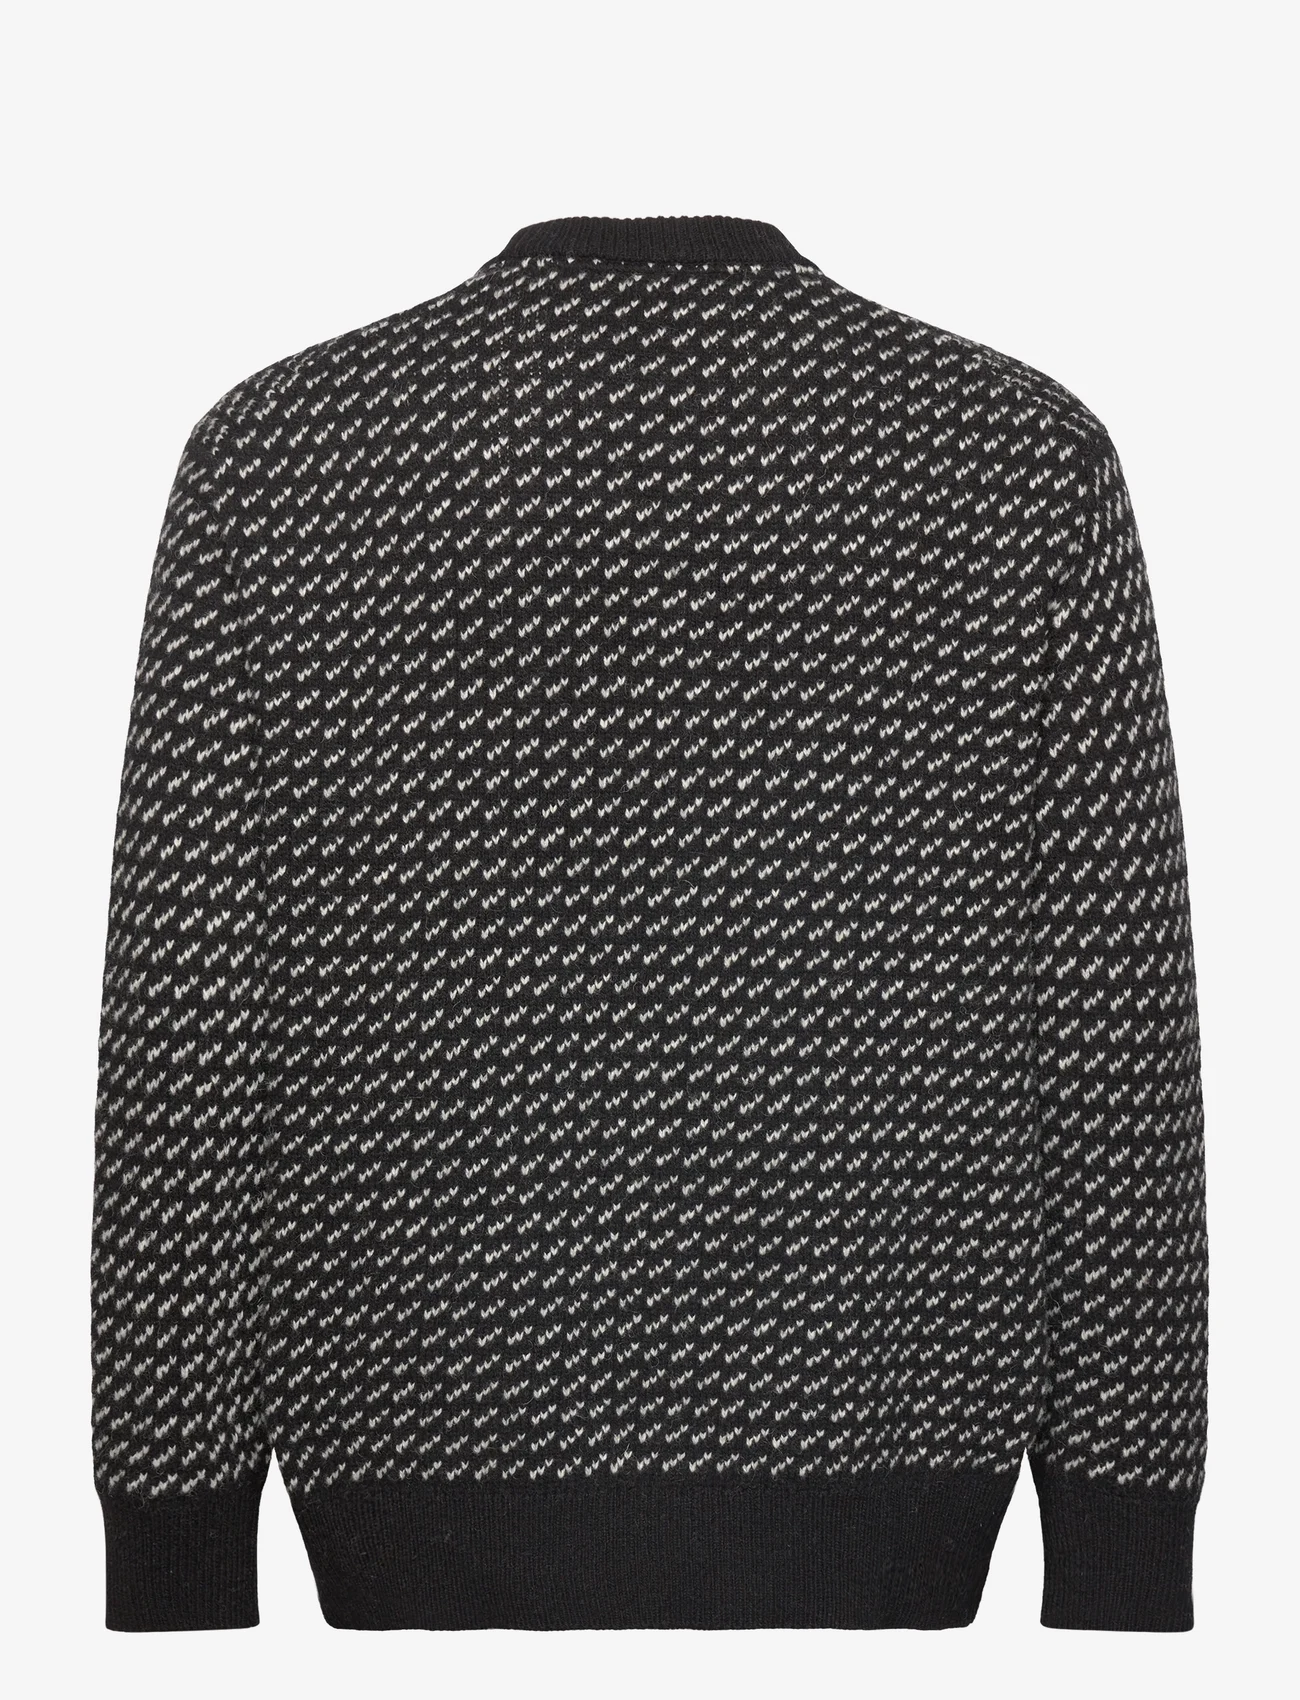 Mads Nørgaard - Shetland Gustav Lusekofte Knit - knitted round necks - black/grey melange - 1